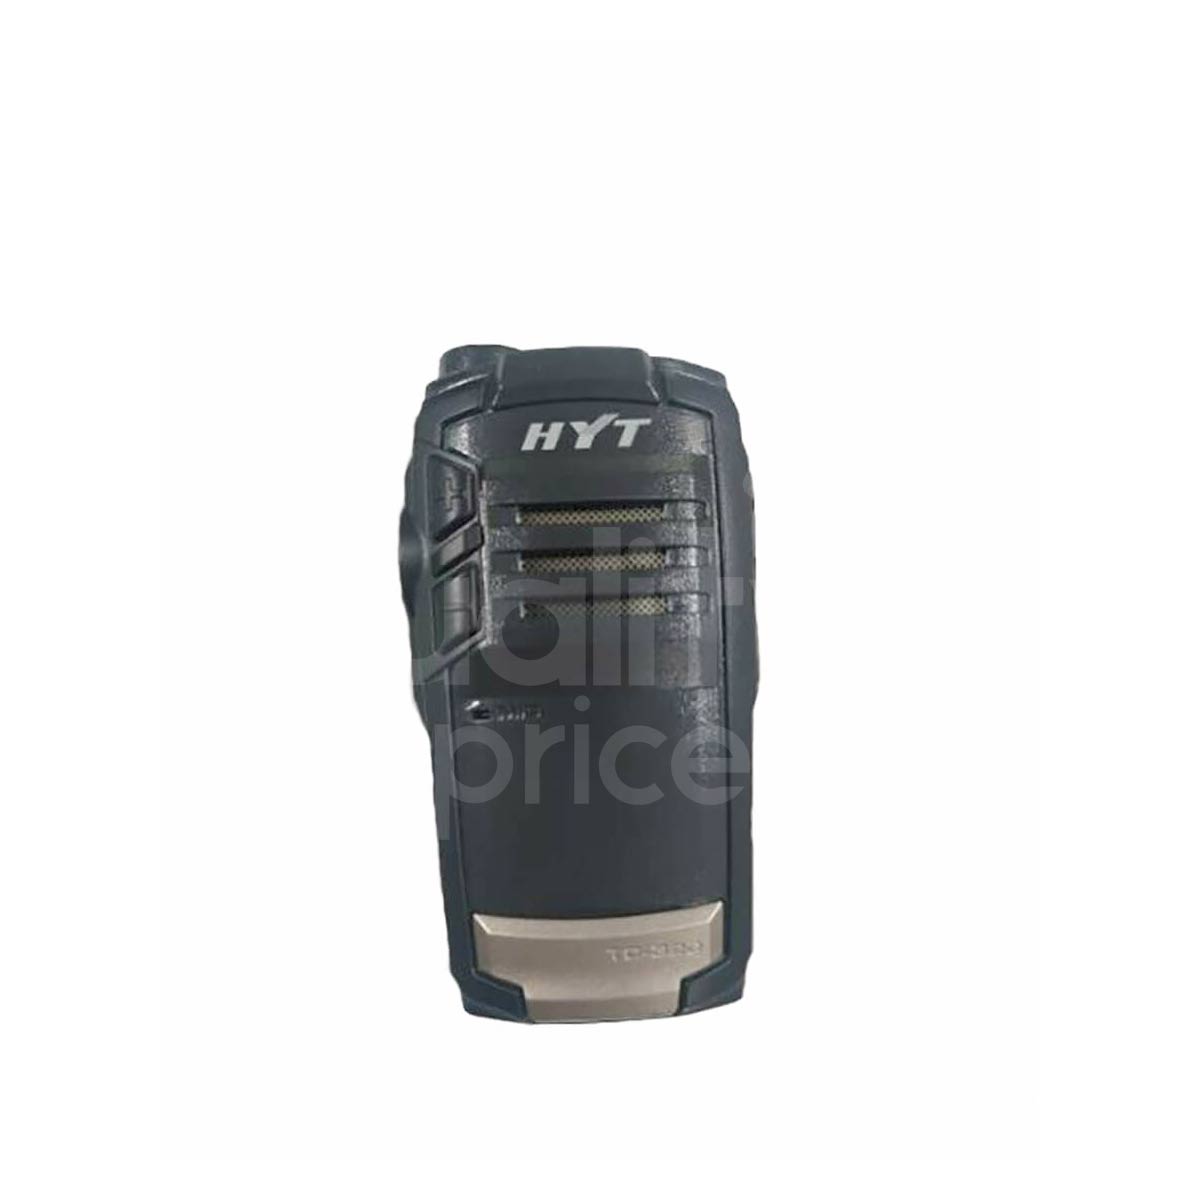 Carcasa Hytera Frontal 11530000000206 para Radio Portátil TC320 - Quality and Price